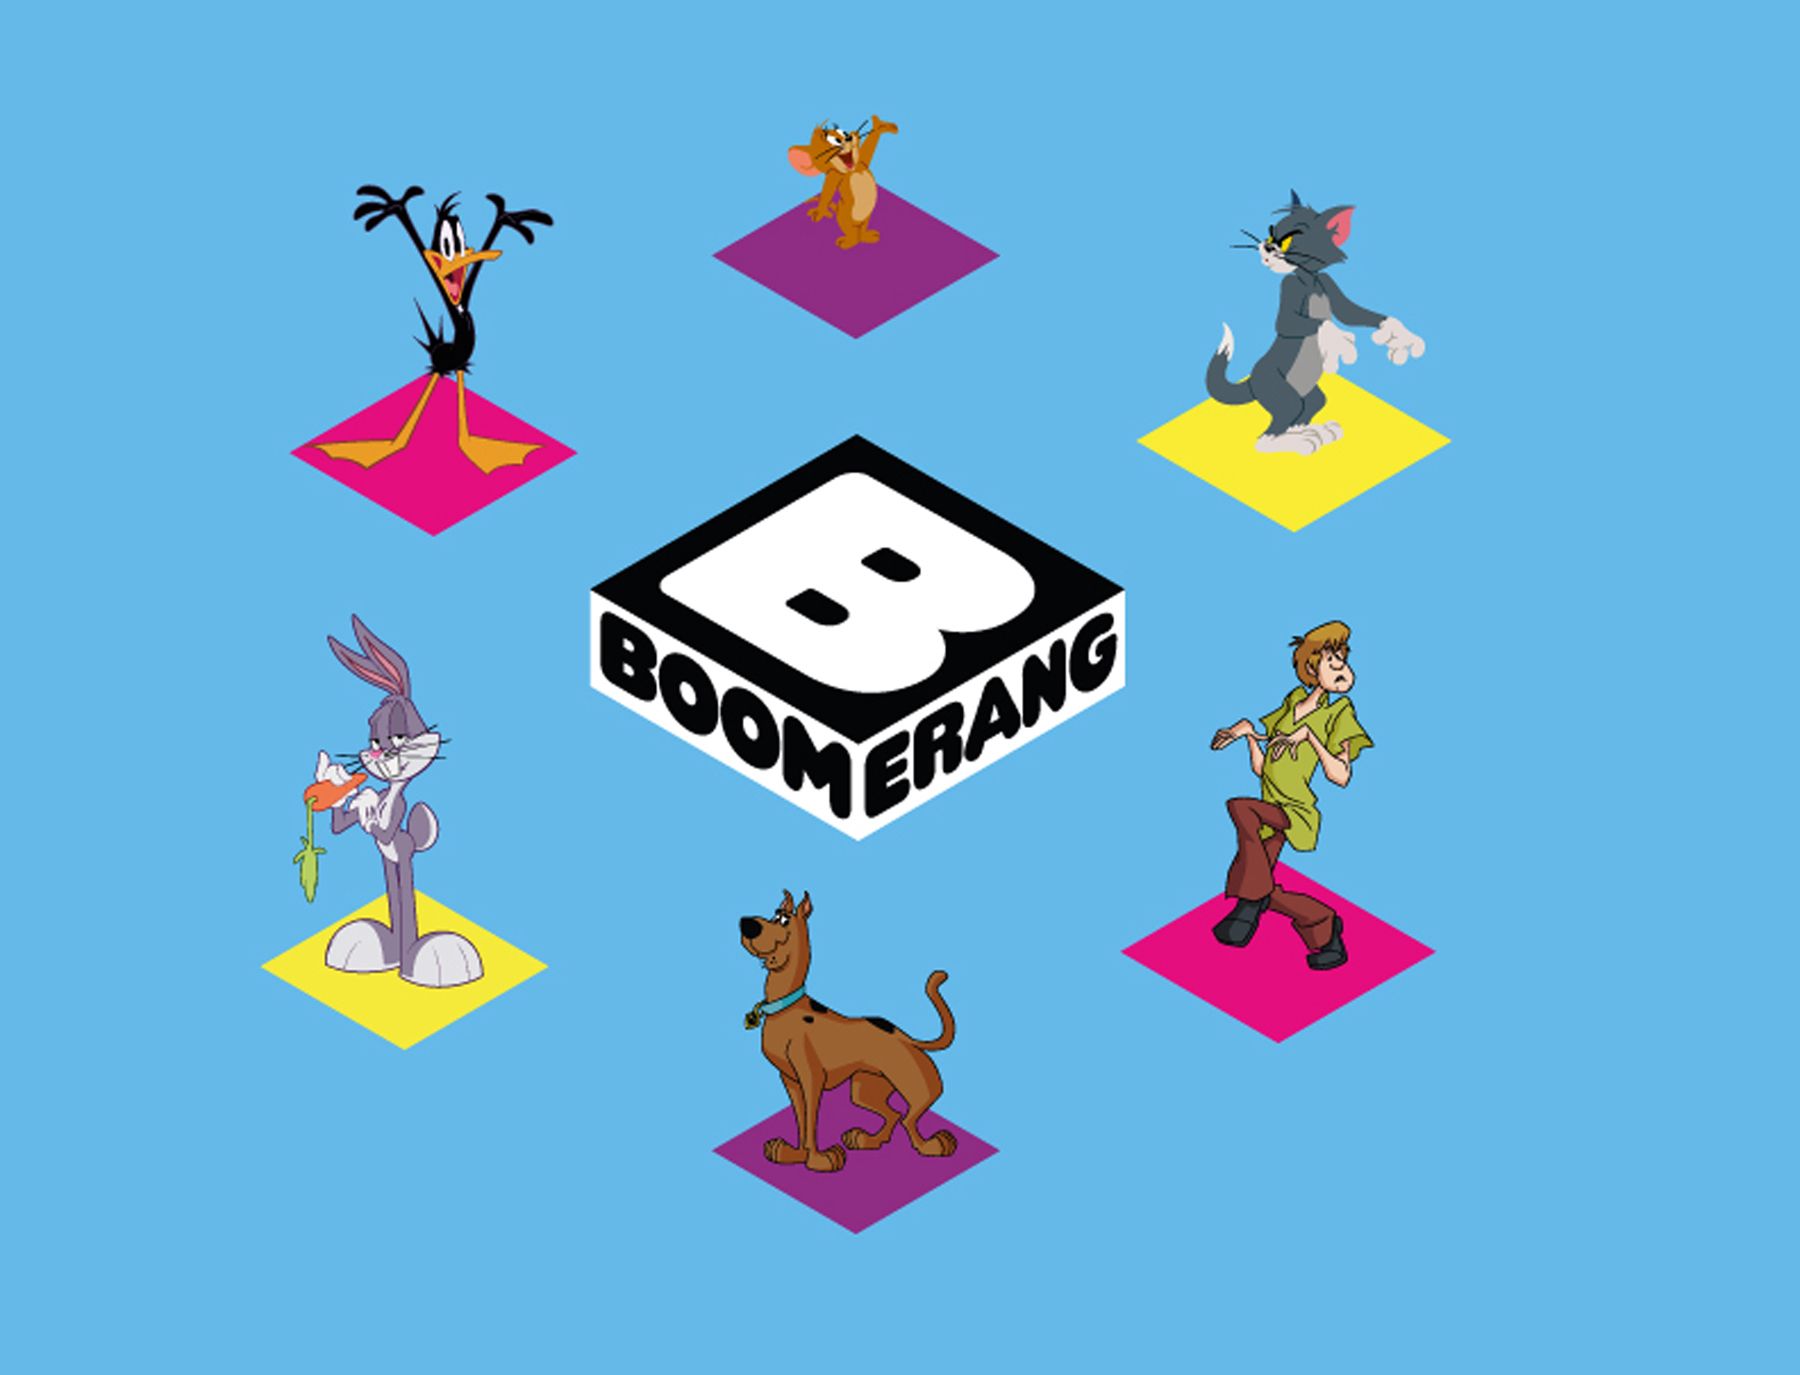 Boomerang regresa